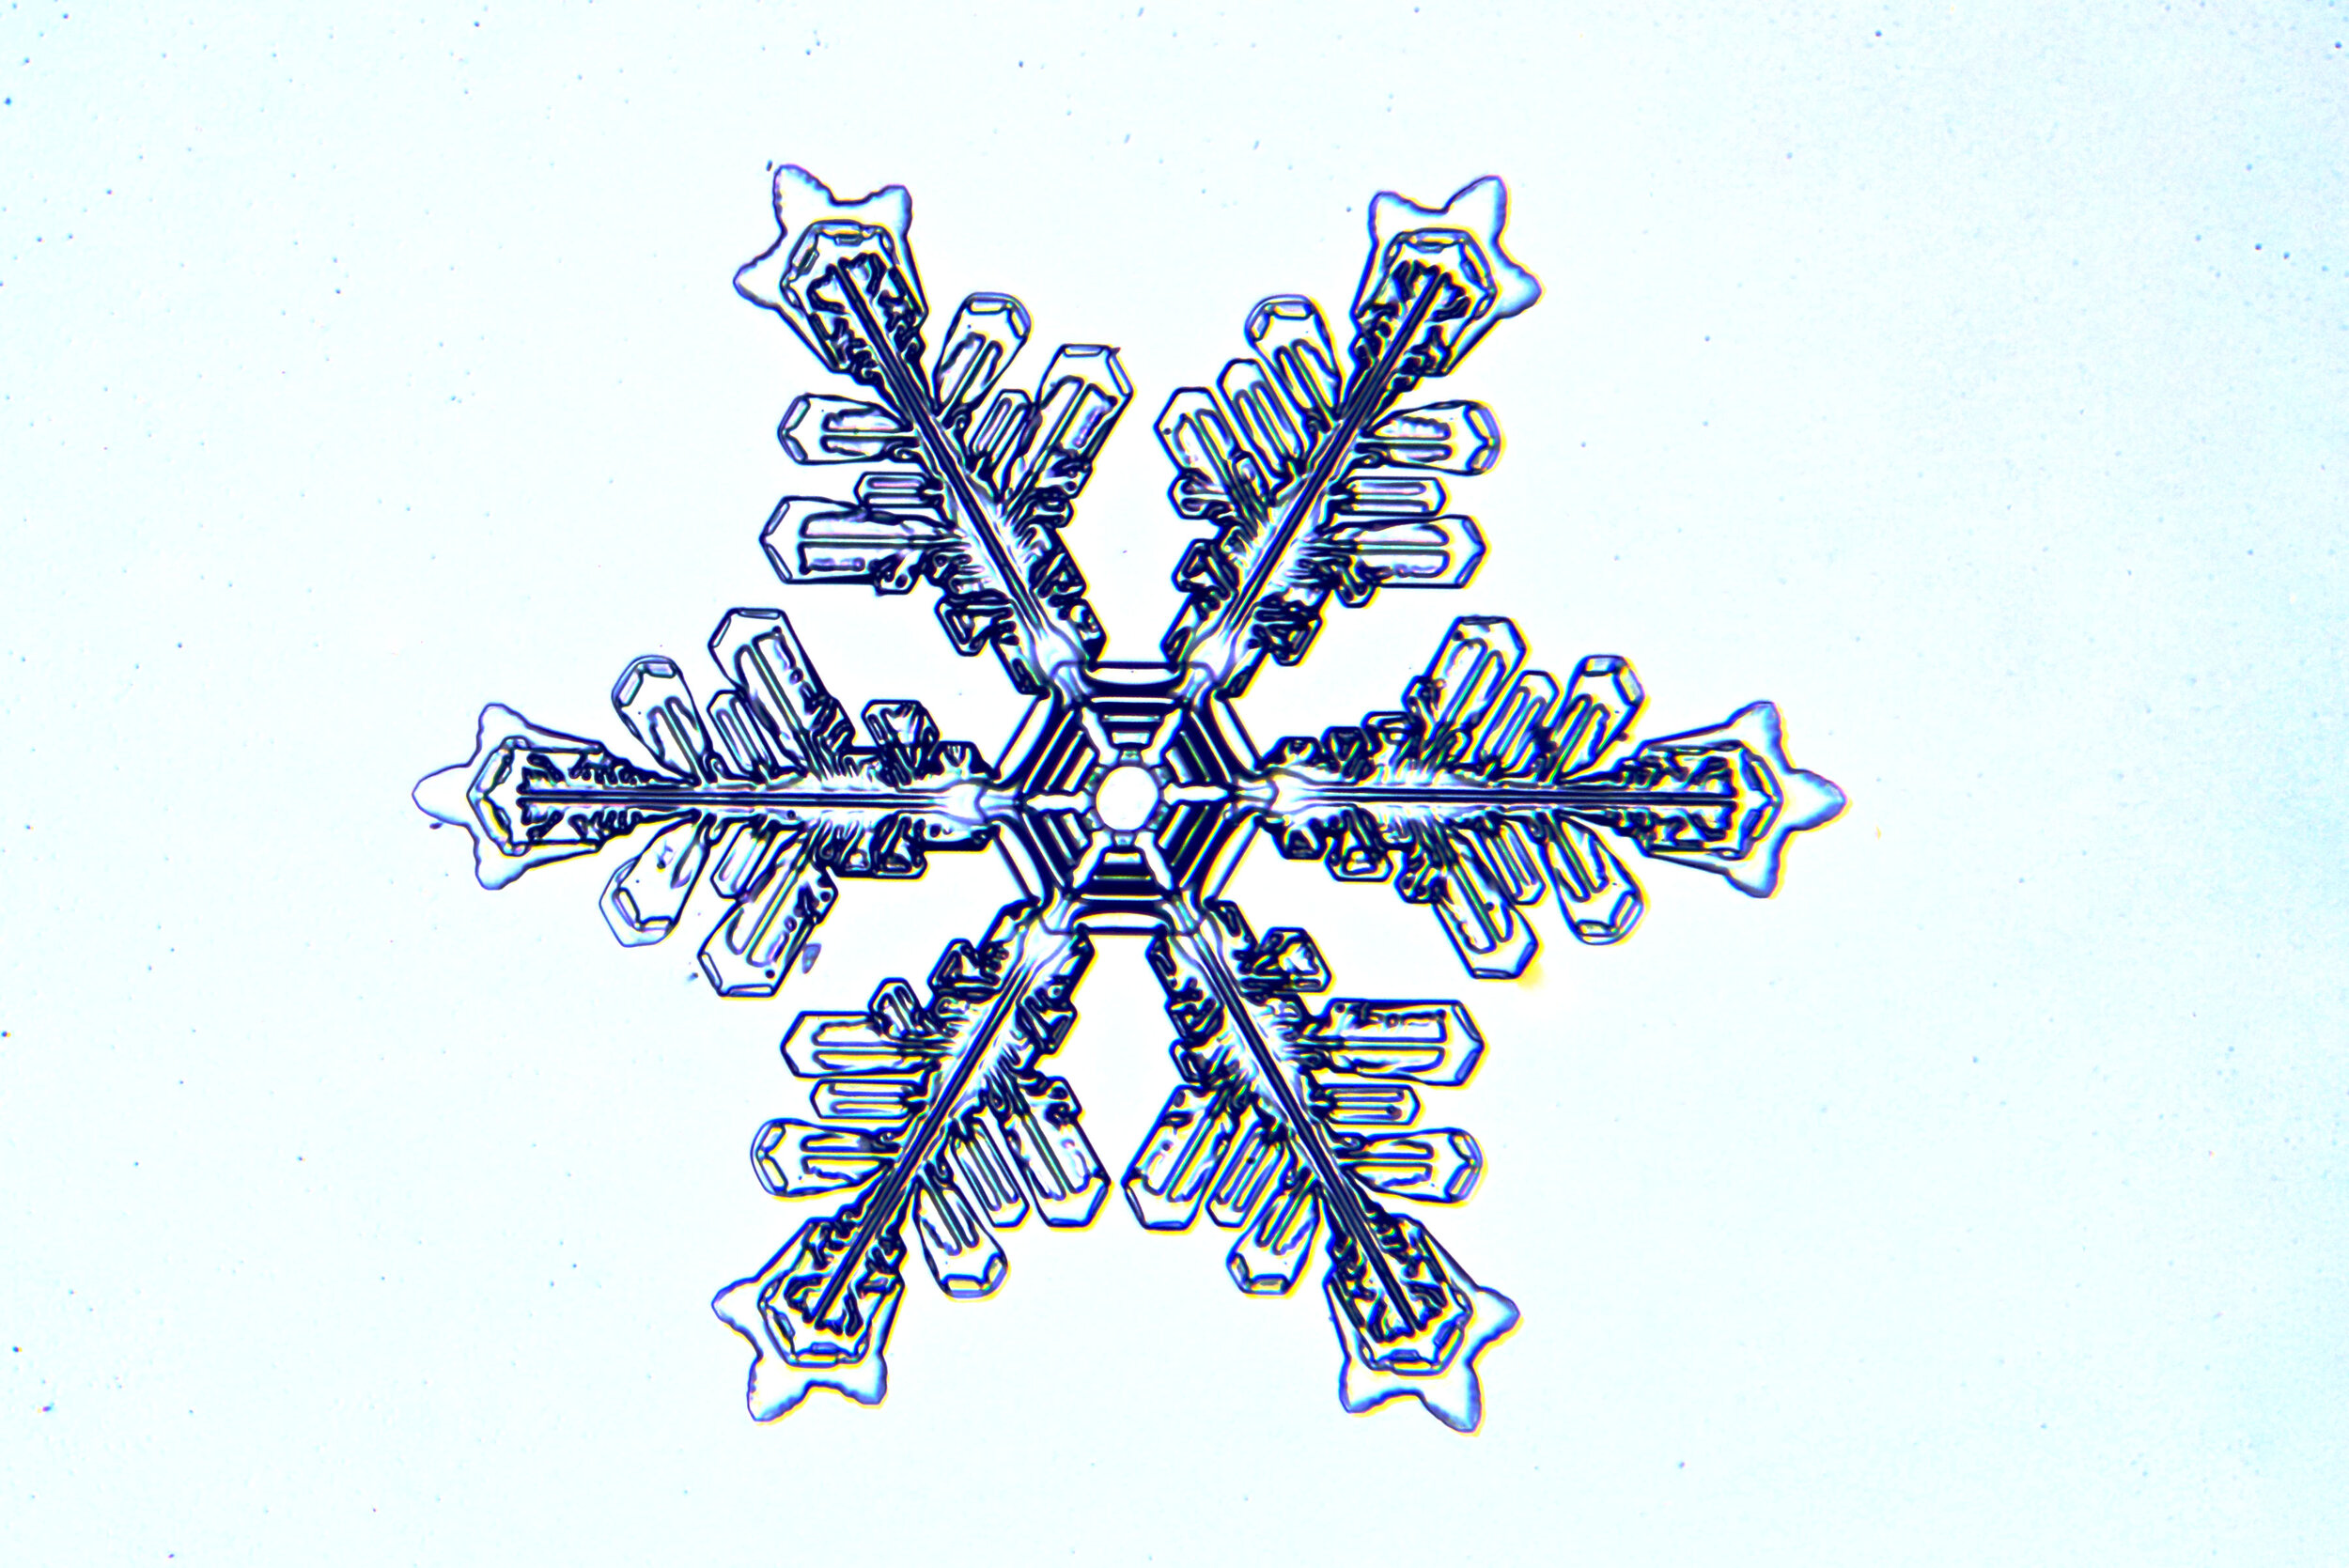 Gary-Mawe-Stellar-Crystal-Snowflake-04.jpg